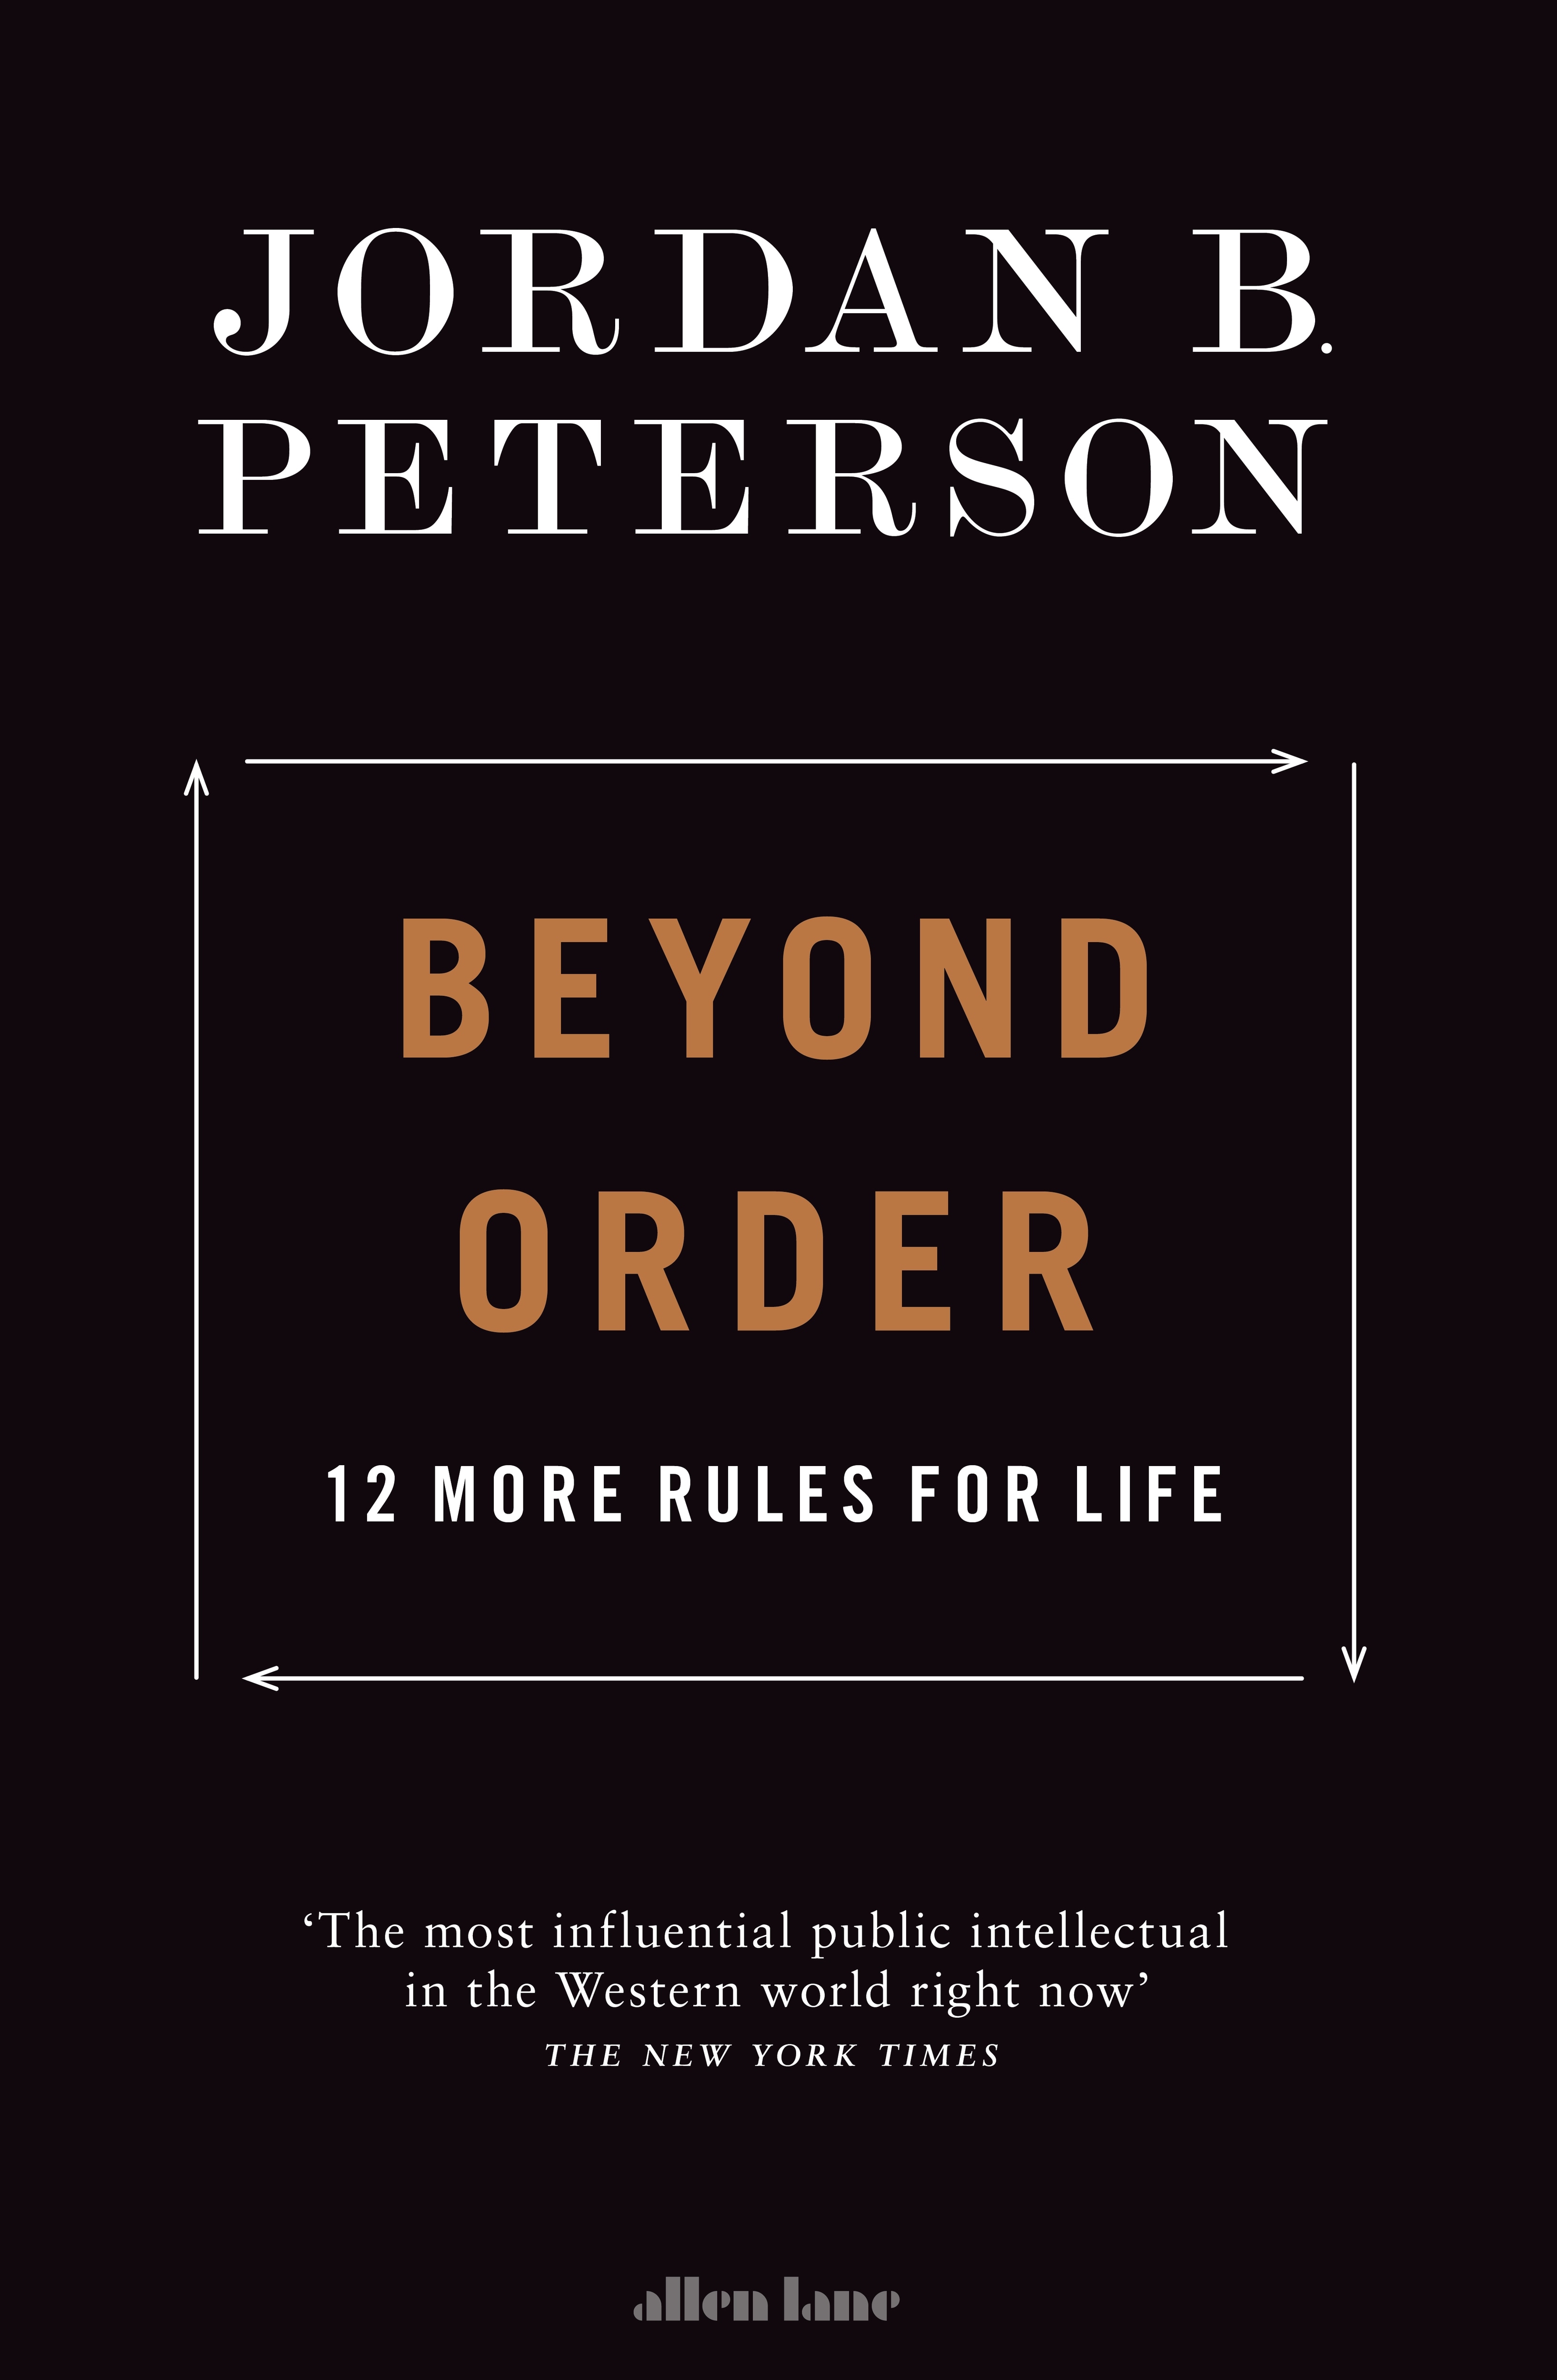 Book “Beyond Order” by Jordan B. Peterson — March 2, 2021